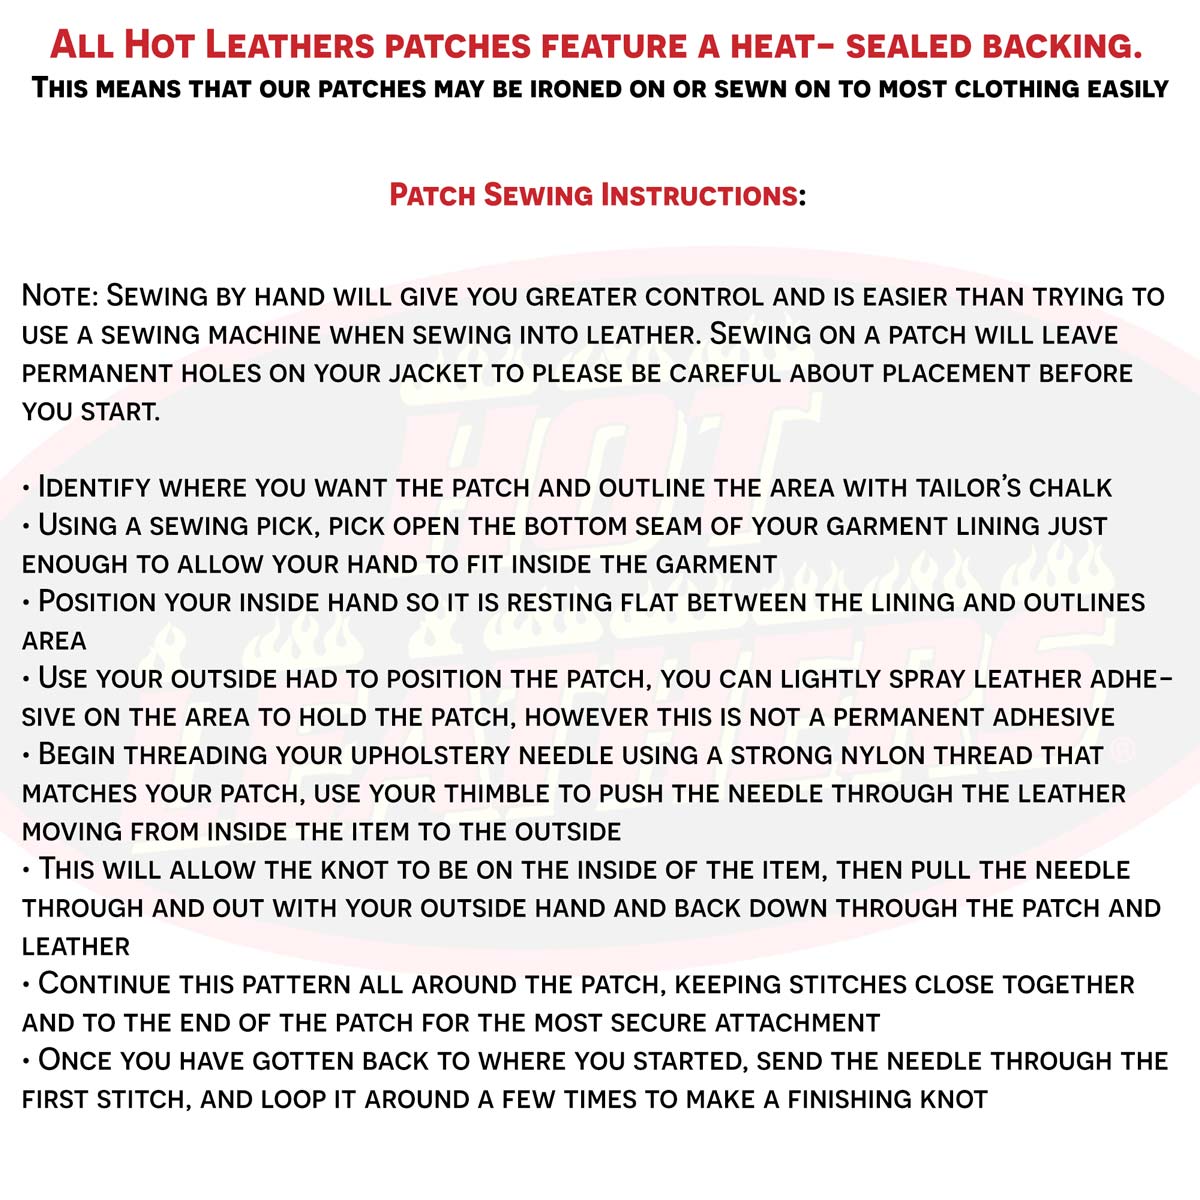 Hot Leathers Missouri 12” X 3” Top Rocker Patch PPM4049